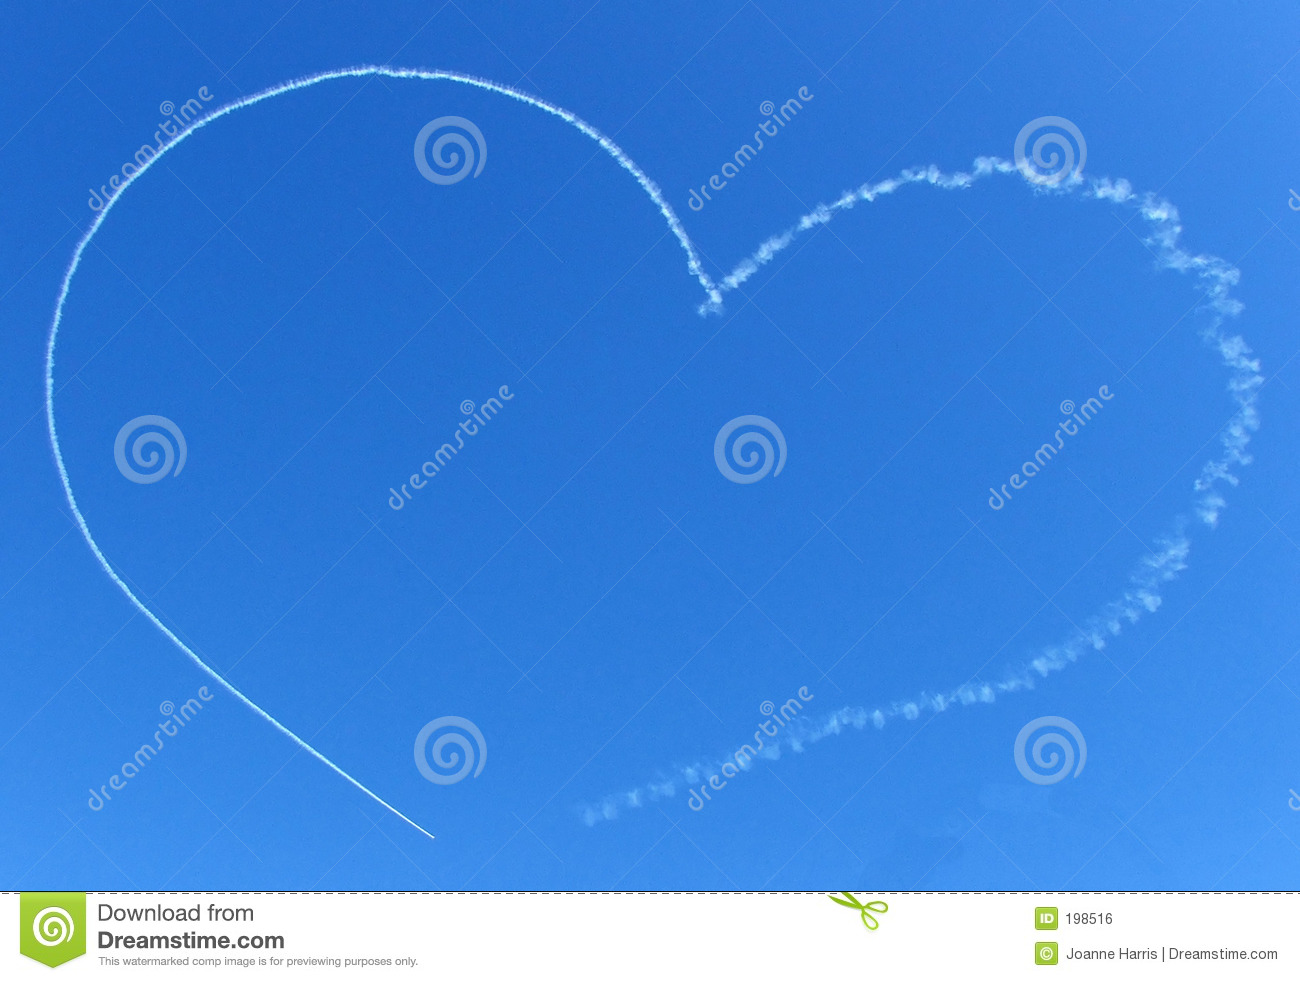 Sky   Jet Stream Heart Royalty Free Stock Image   Image  198516